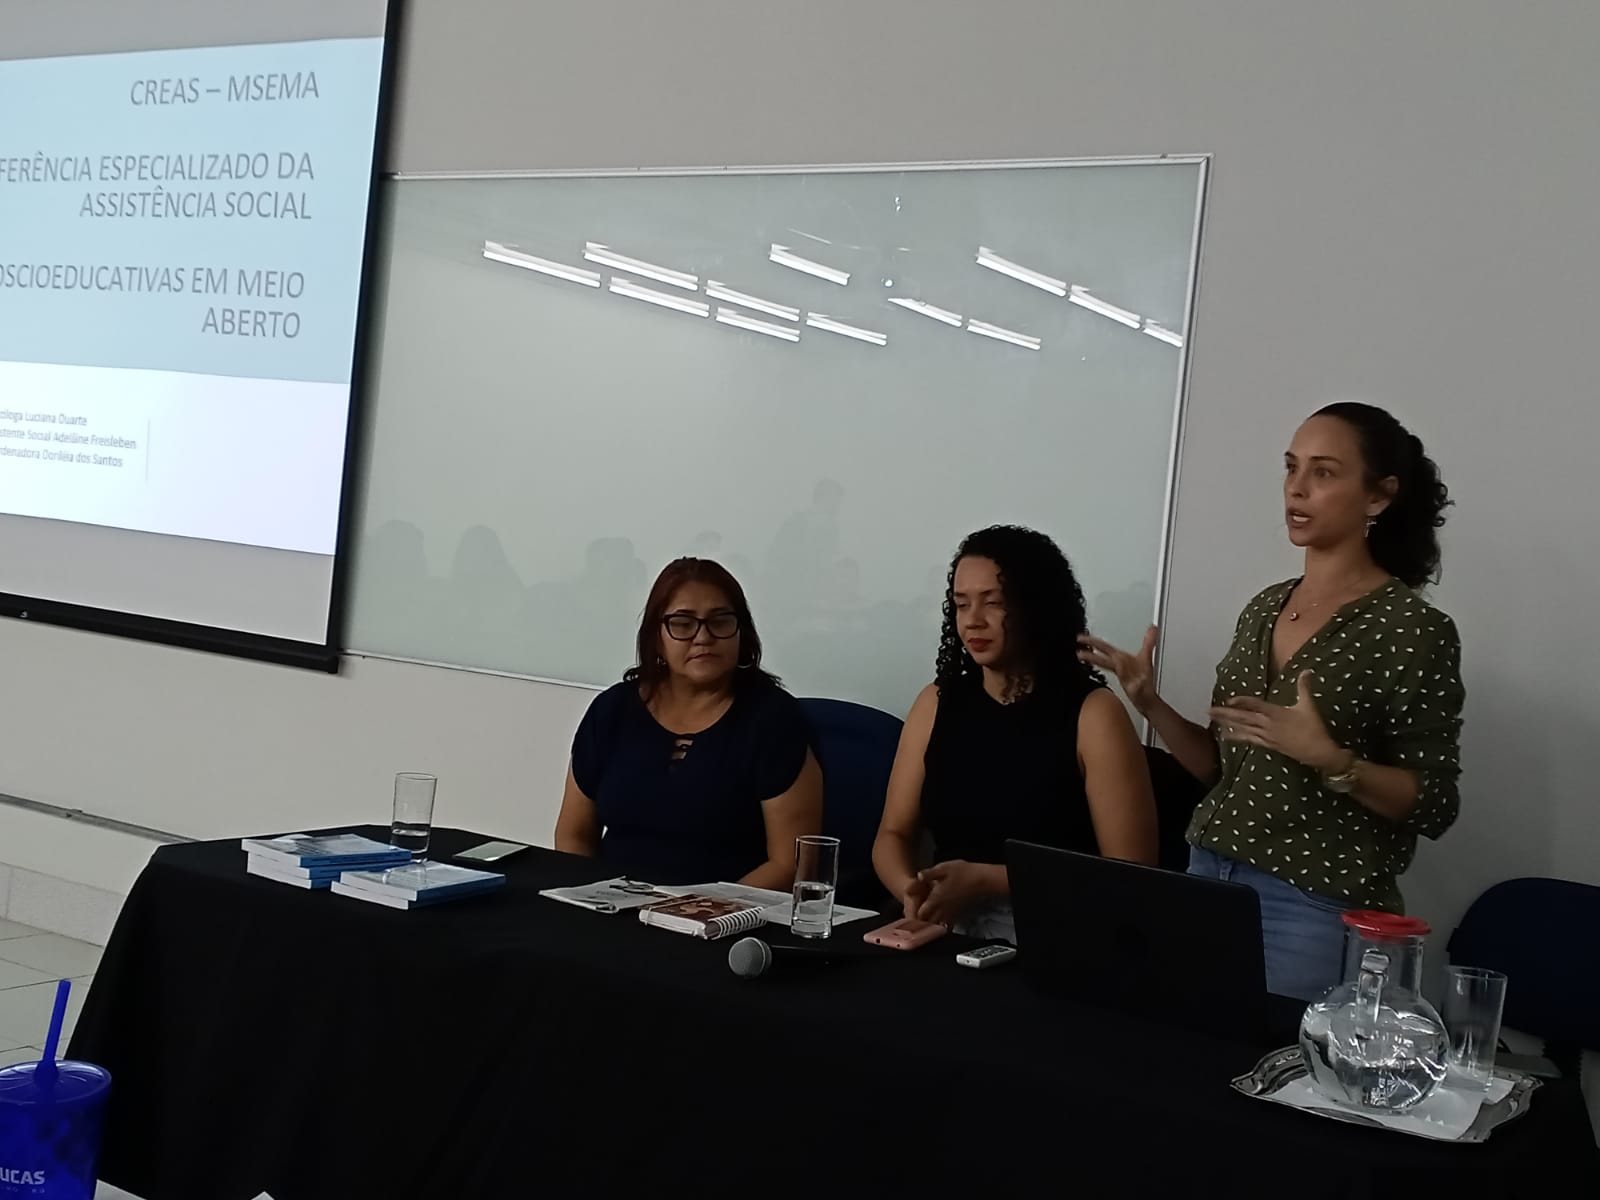 Palestra apresenta Serviço de Medida Socioeducativa em Meio Aberto realizado pelo município de Porto Velho